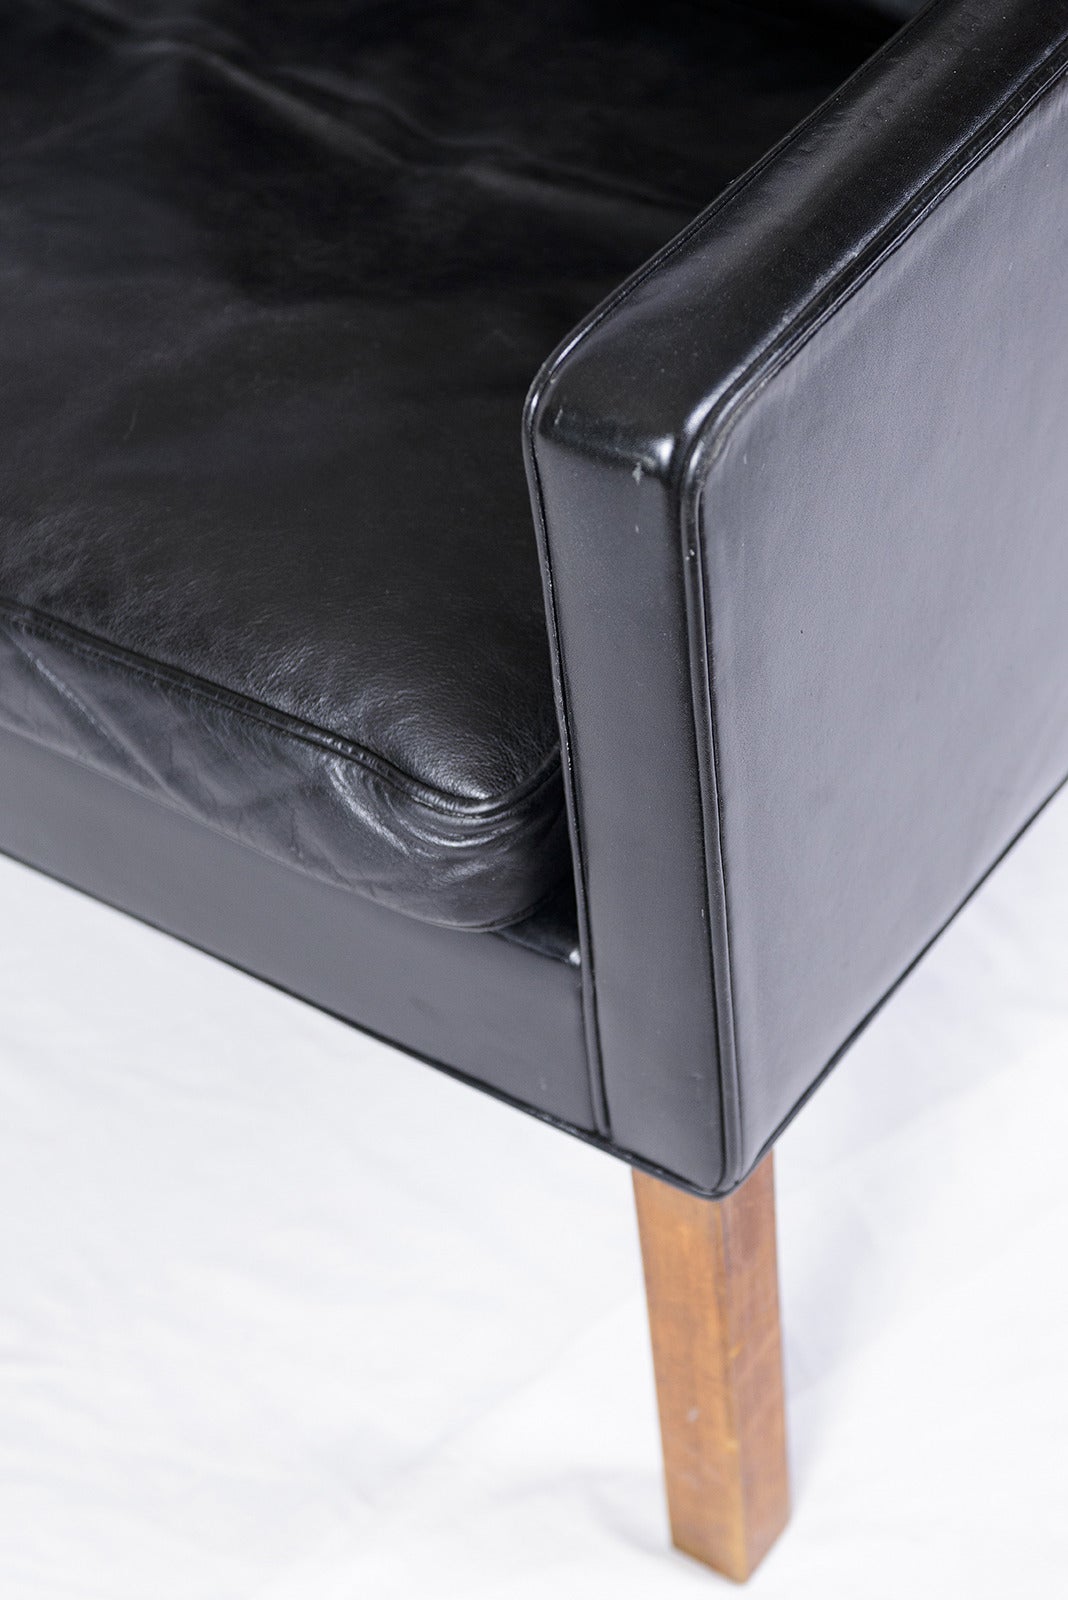 Børge Mogensen Model #2209 Three-Seat Leather Sofa 1